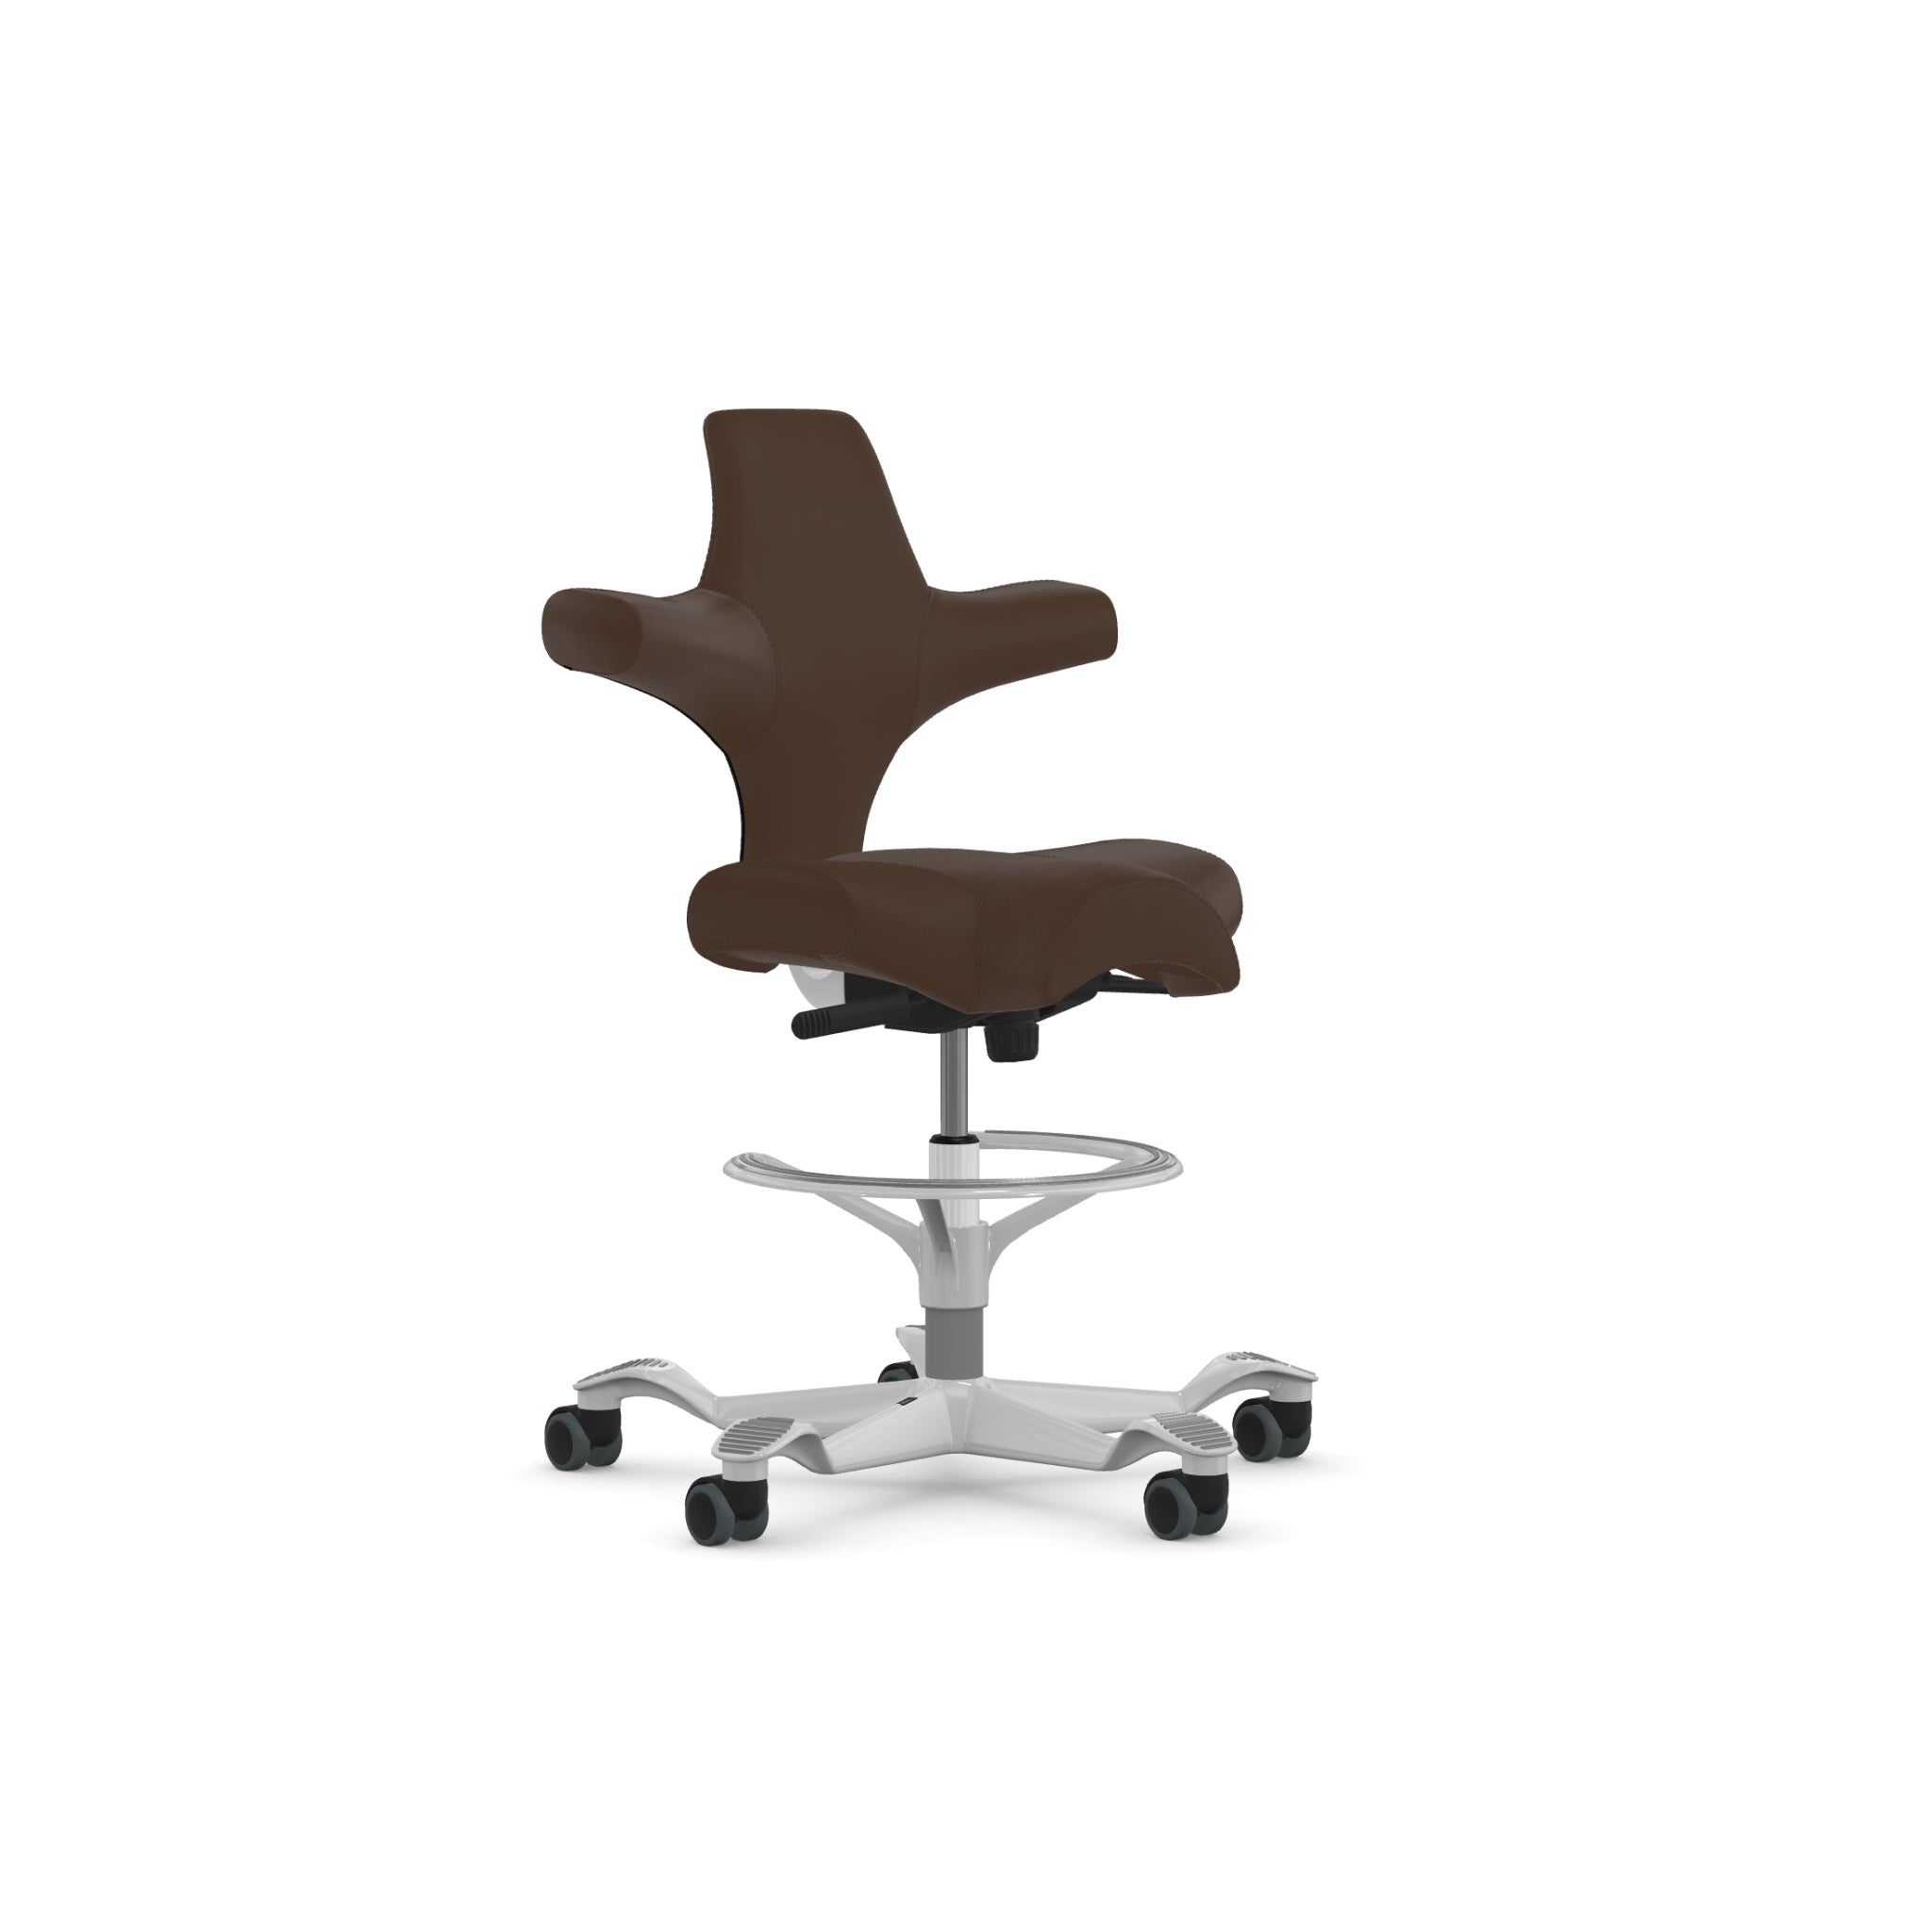 HAG Capisco 8106 Chair: Ergonomic Seating for Active Workspaces 